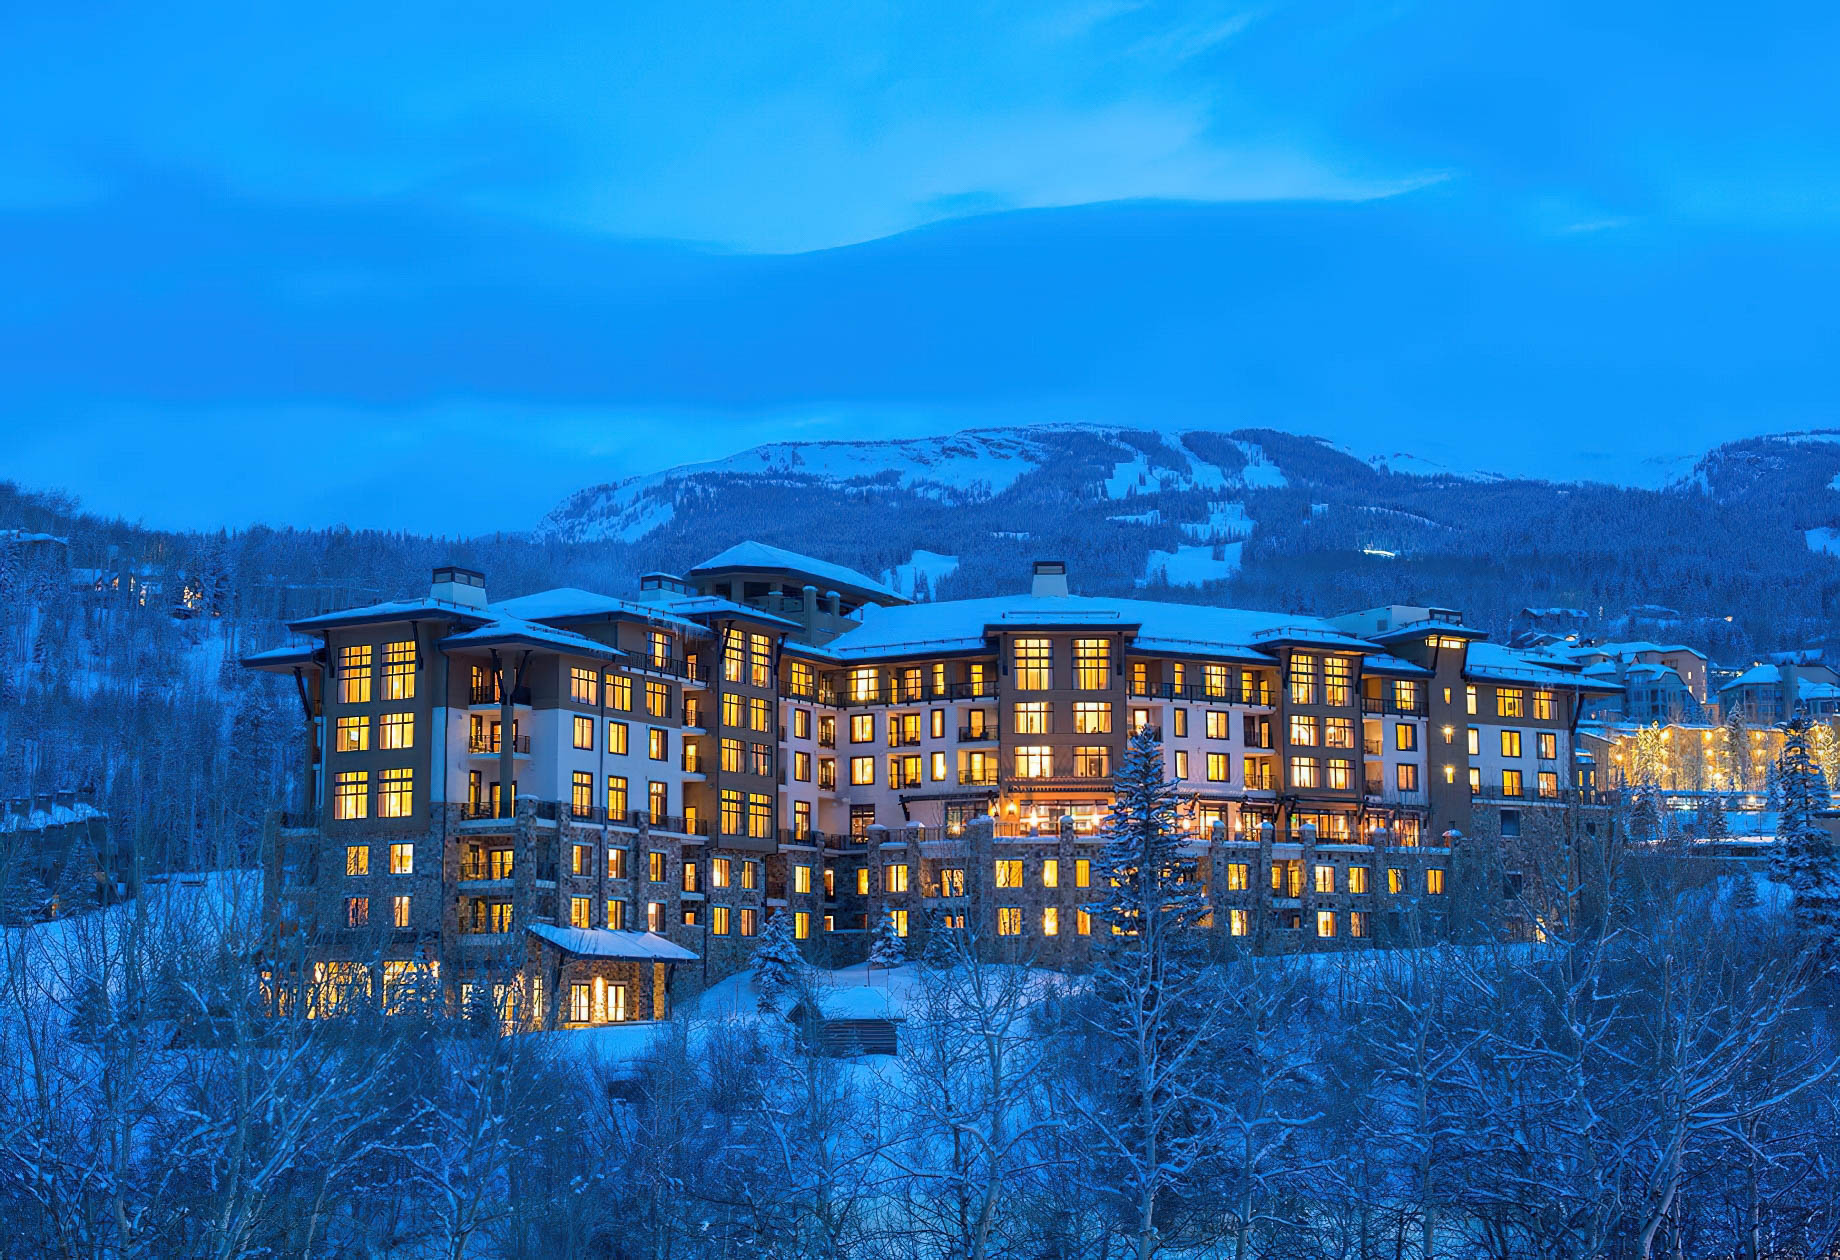 Viceroy Snowmass Luxury Resort – Aspen Snowmass Village, CO, USA – Hotel Winter View